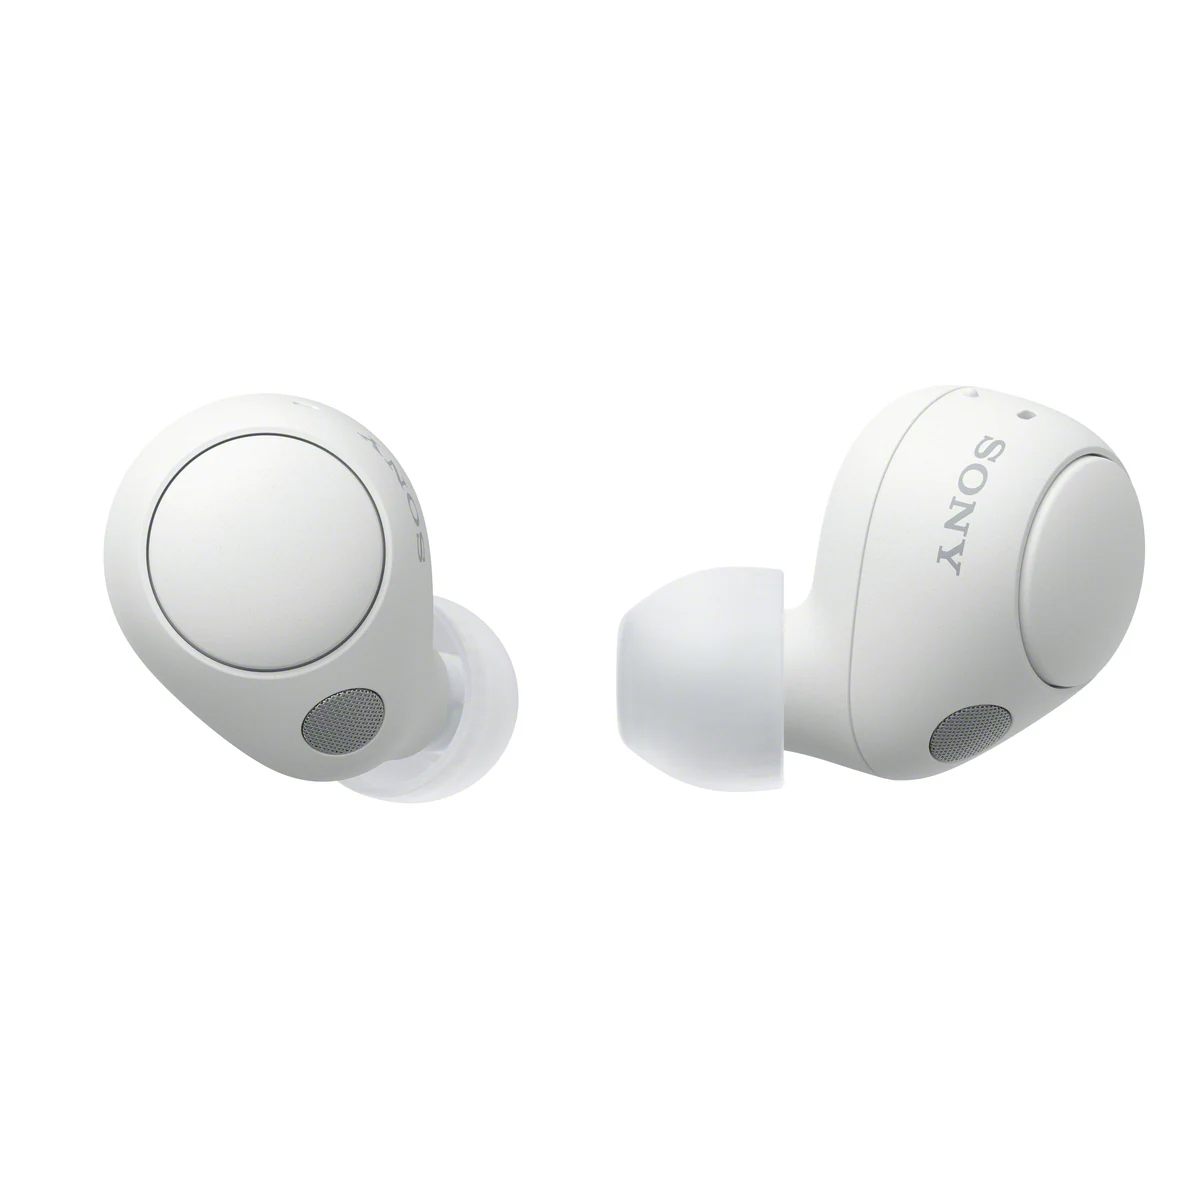 Buy Sony WF-C700N全無線降噪耳機for HKD 799.00 | 音響產品| csl eShop